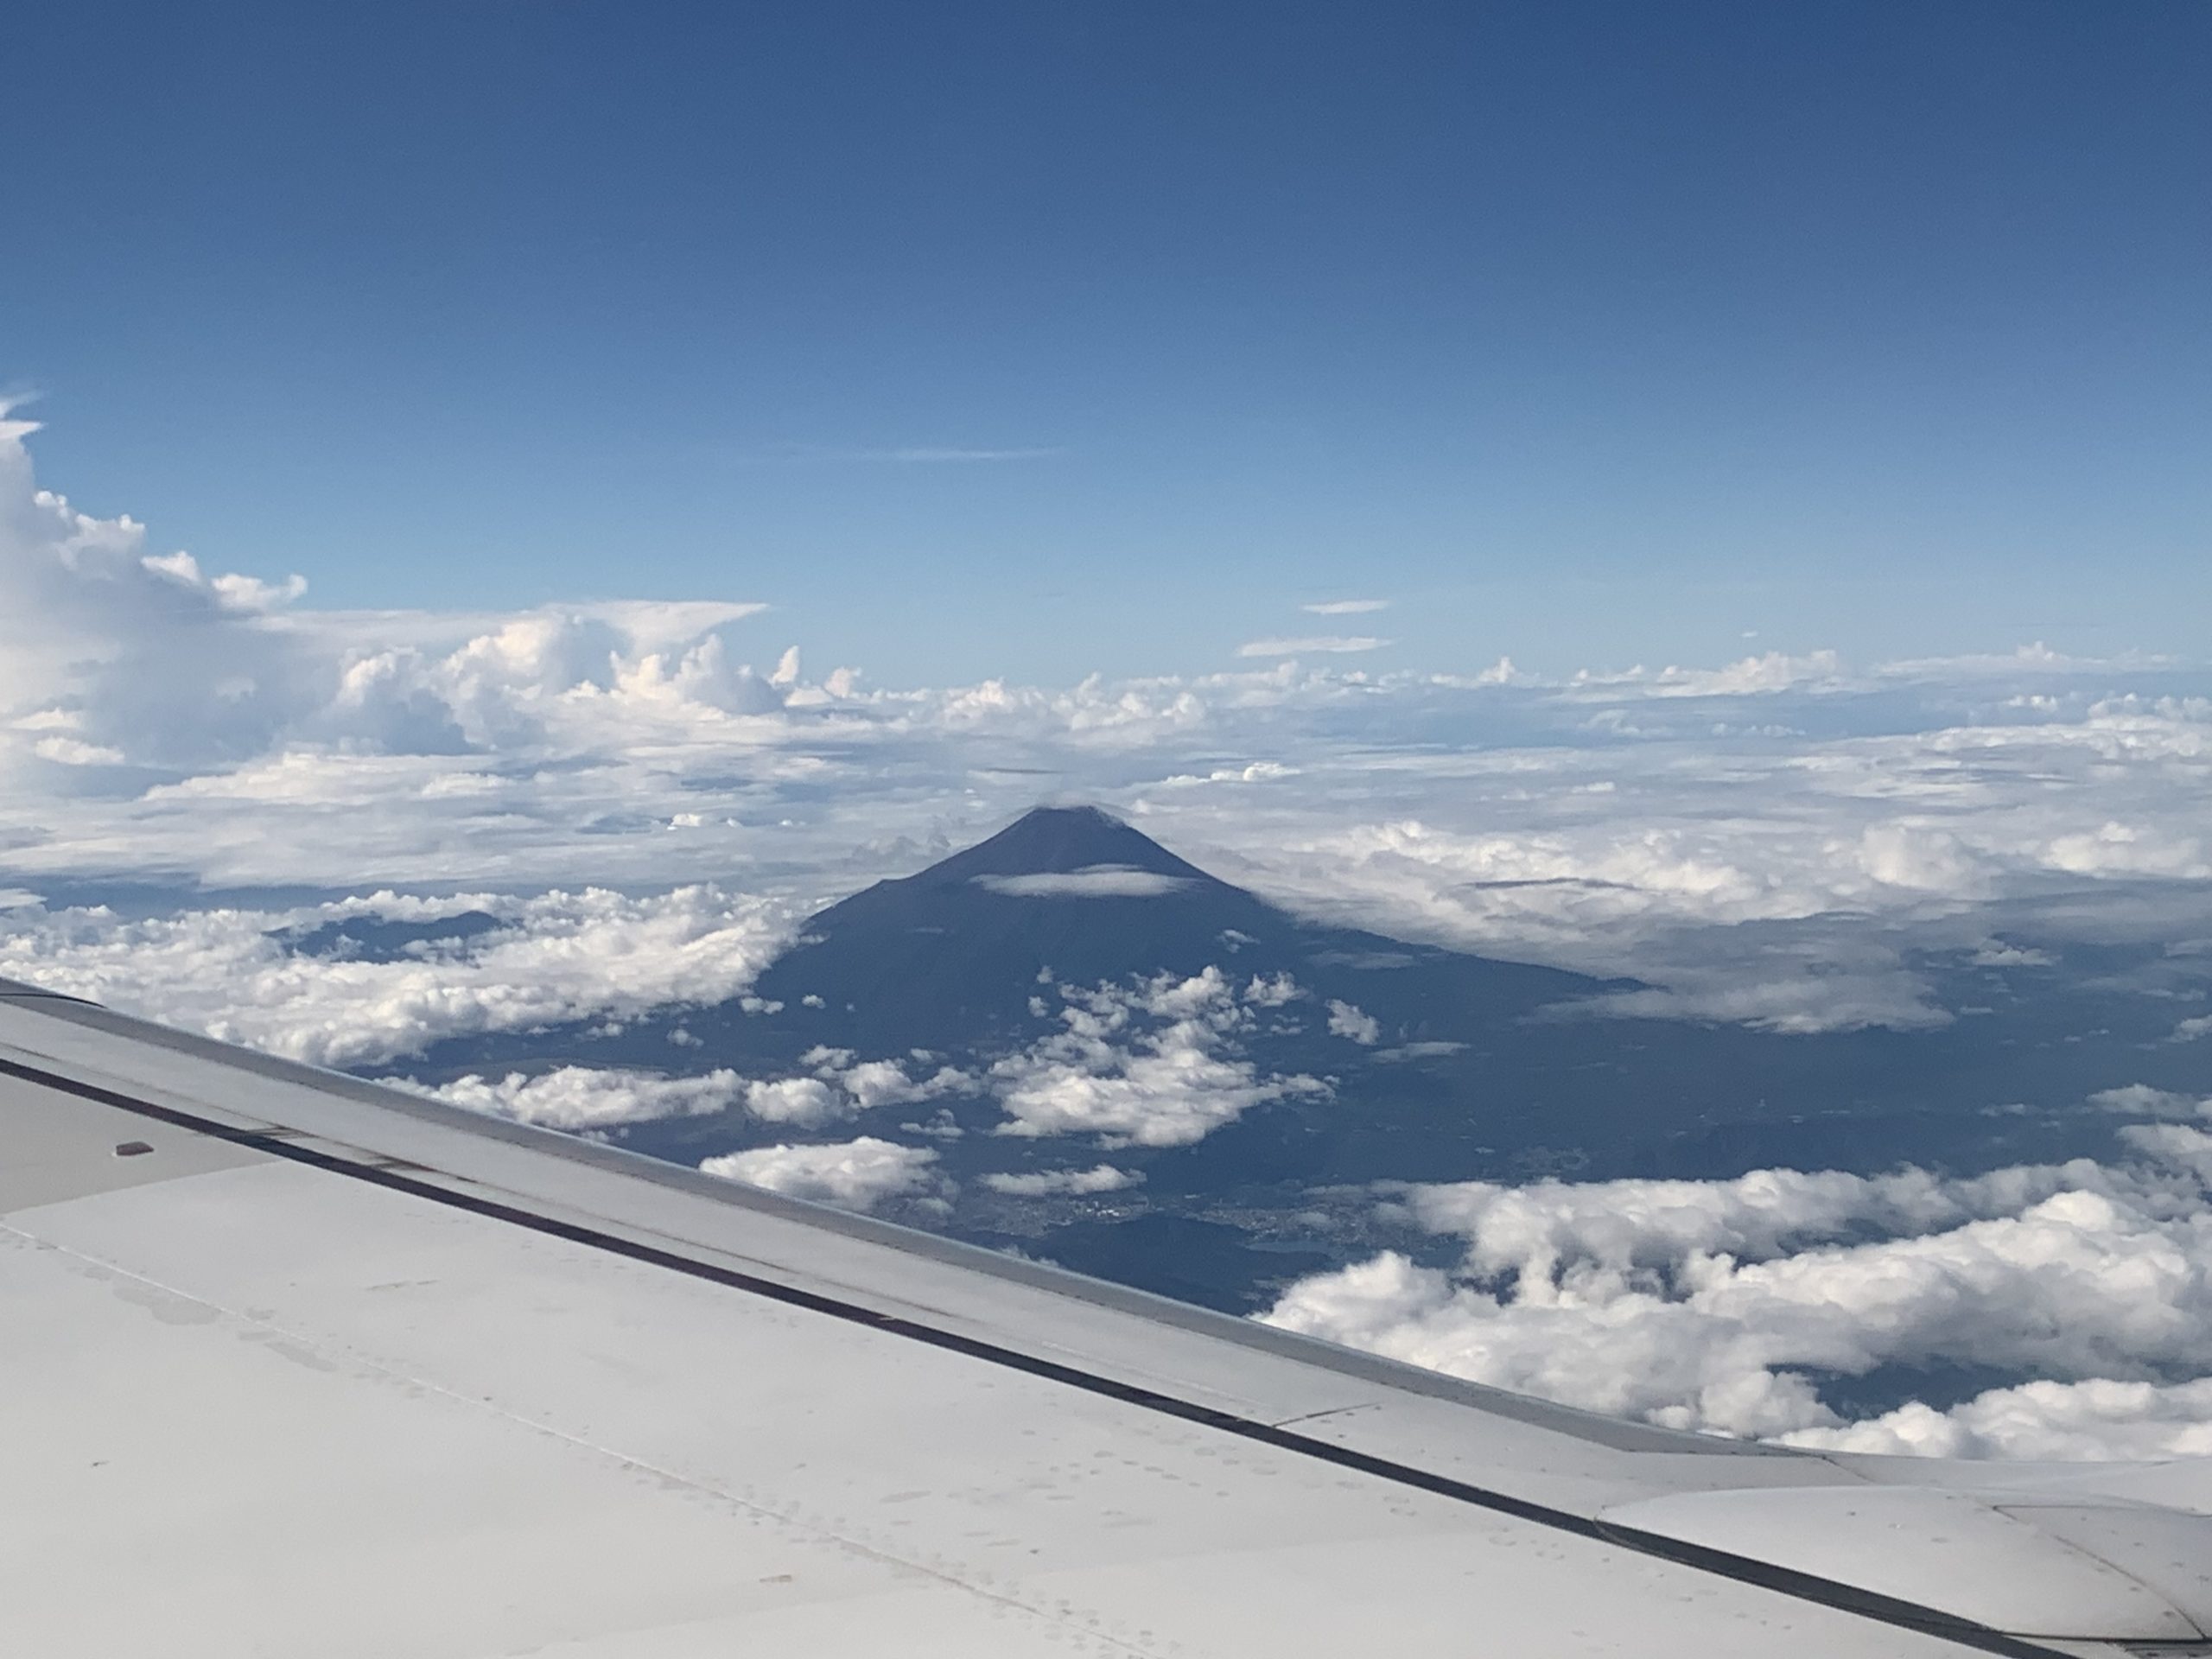 Image of Mount Fuji, or Fuji-san, taken from my plane as we fly into Nagoya.